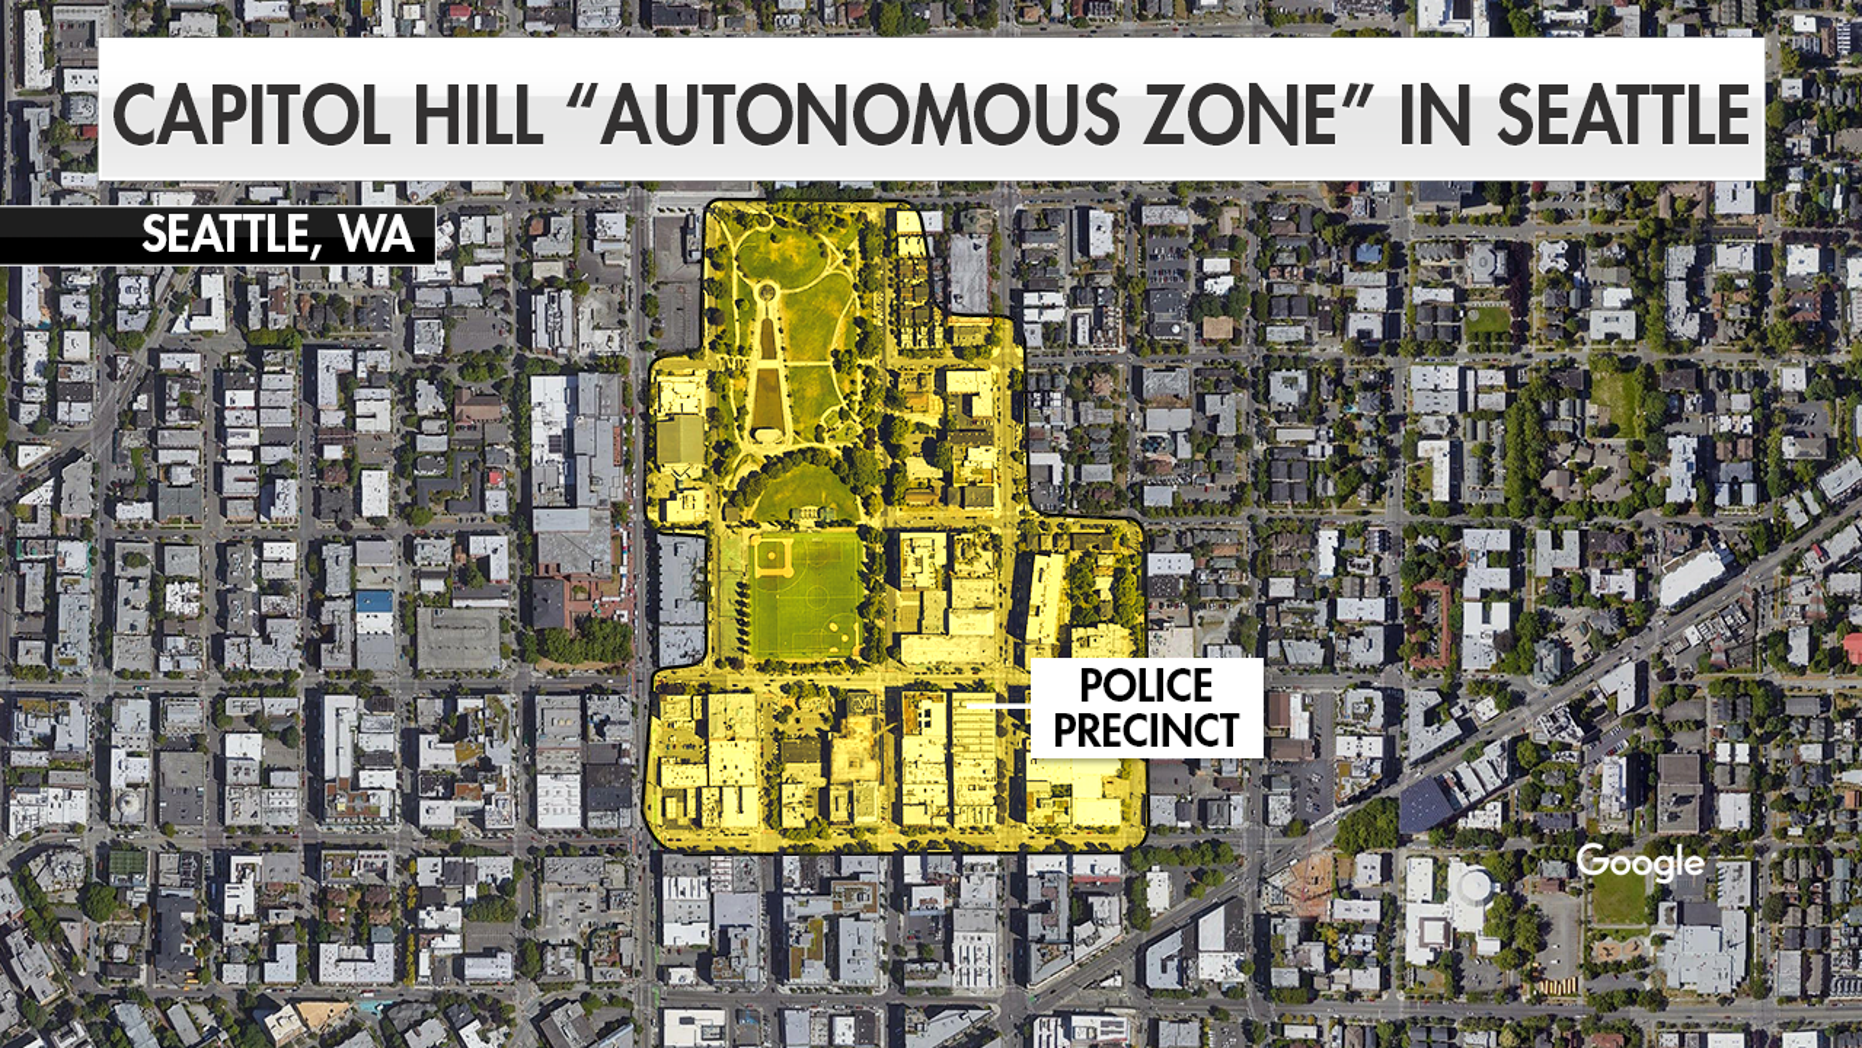 CUSTOM_MAP_Seattle_Capital_Hill_Autonomous_Zone_Precint.png